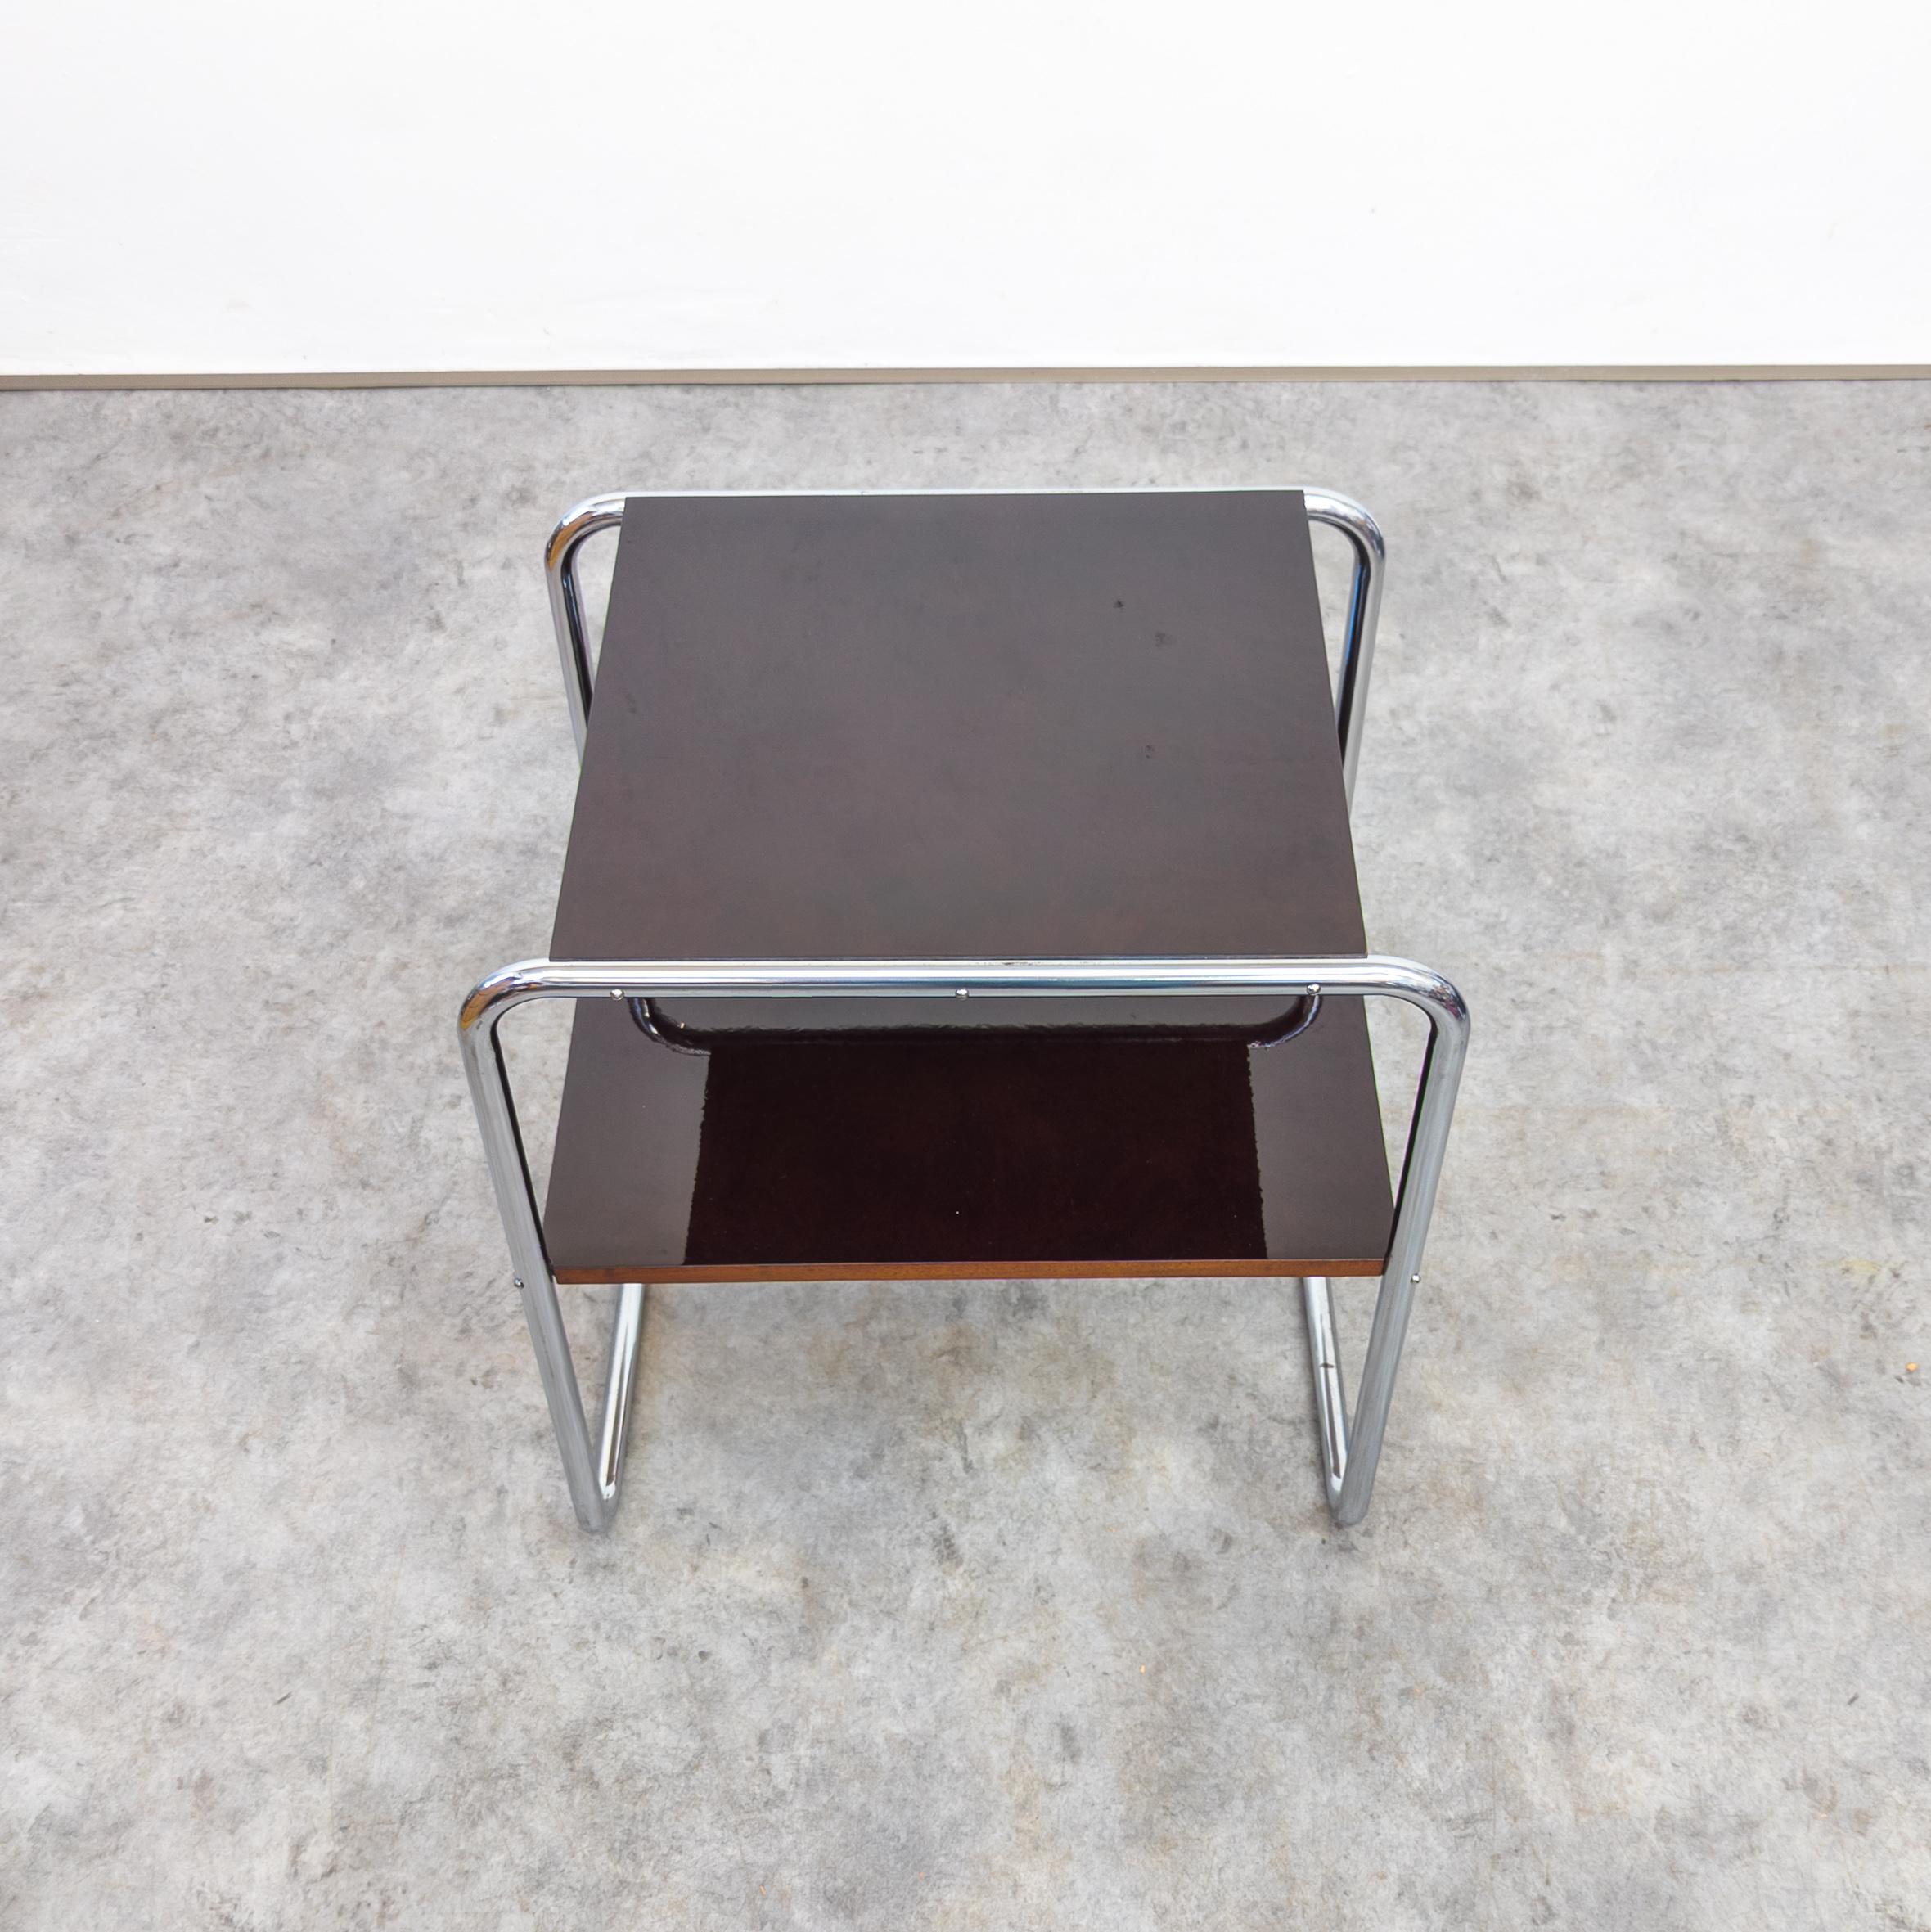 Rare restored Bauhaus tubular steel side table by Marcel Breuer  For Sale 3